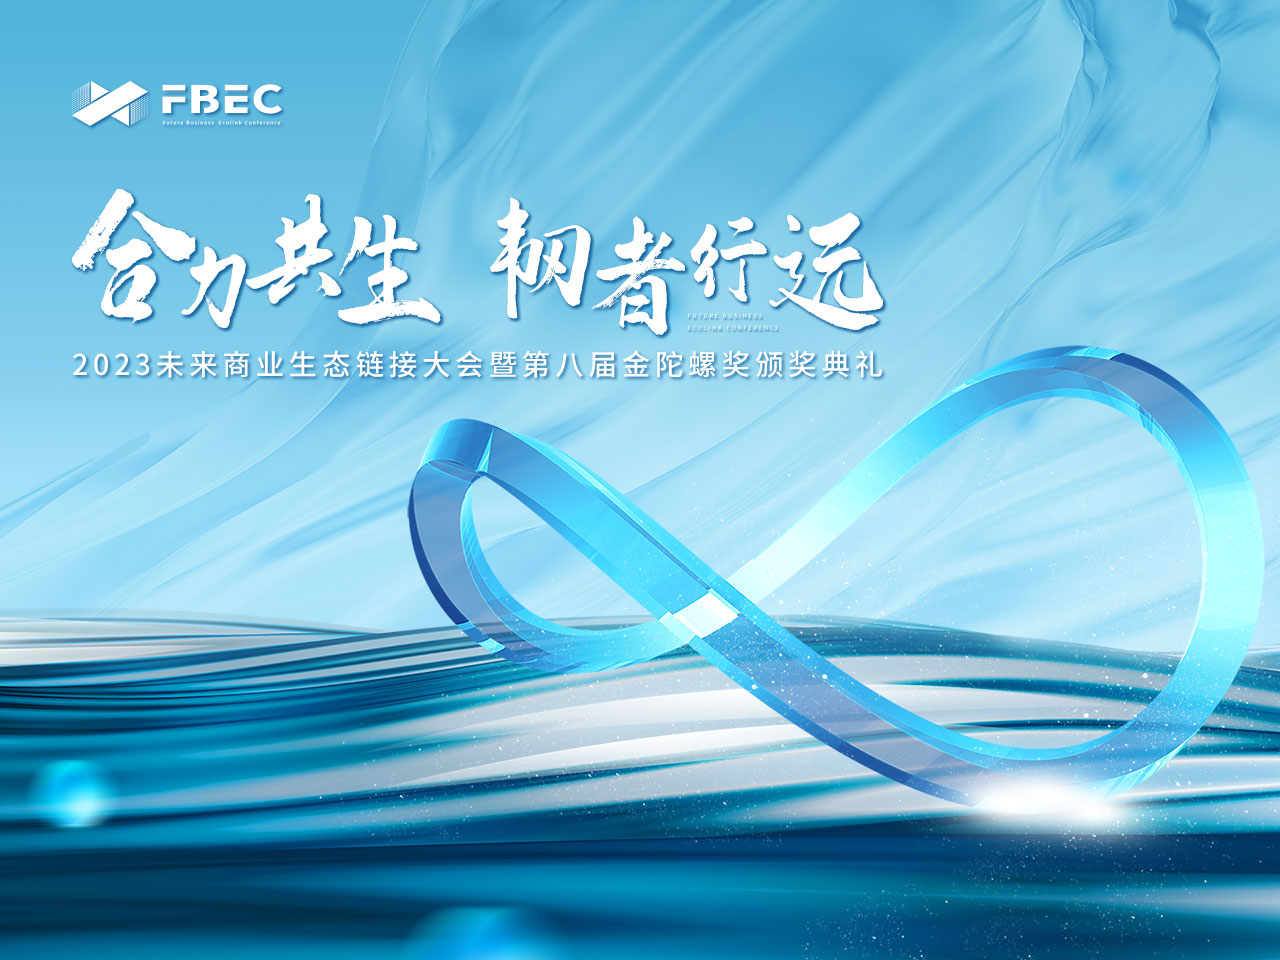 FBEC2023 | 华为 VR/AR产品线总裁 李腾跃确认出席并发表主题演讲